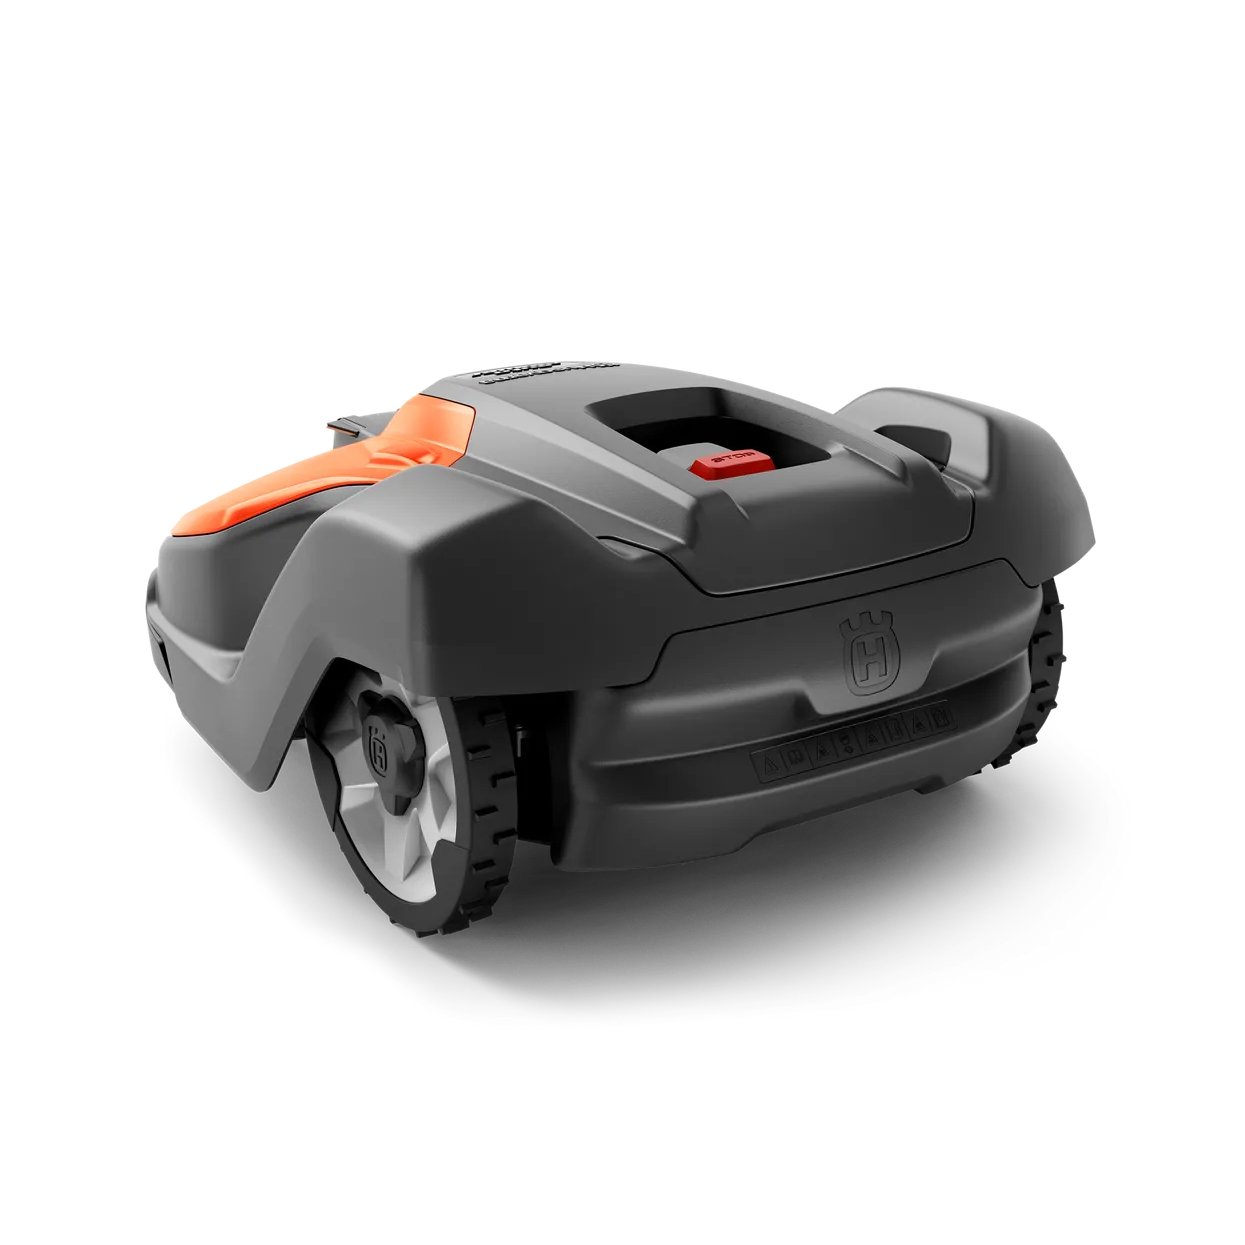 Husqvarna Automower 550 EPOS Robotic Lawn Mower